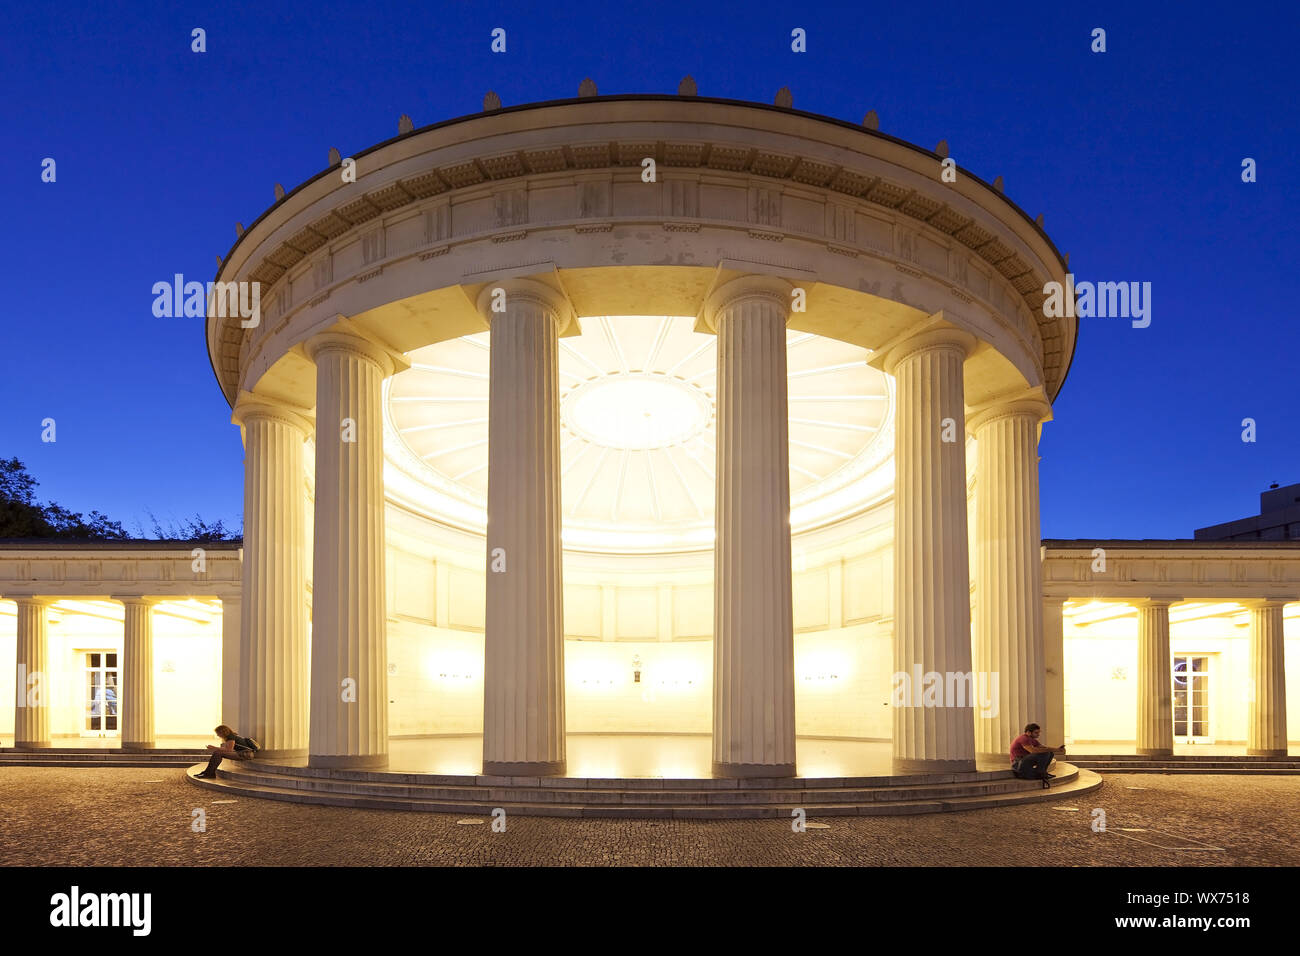 Elisenbrunnen in the evening, Aix-la-Chapelle, North Rhine-Westphalia, Germany, Europe Stock Photo